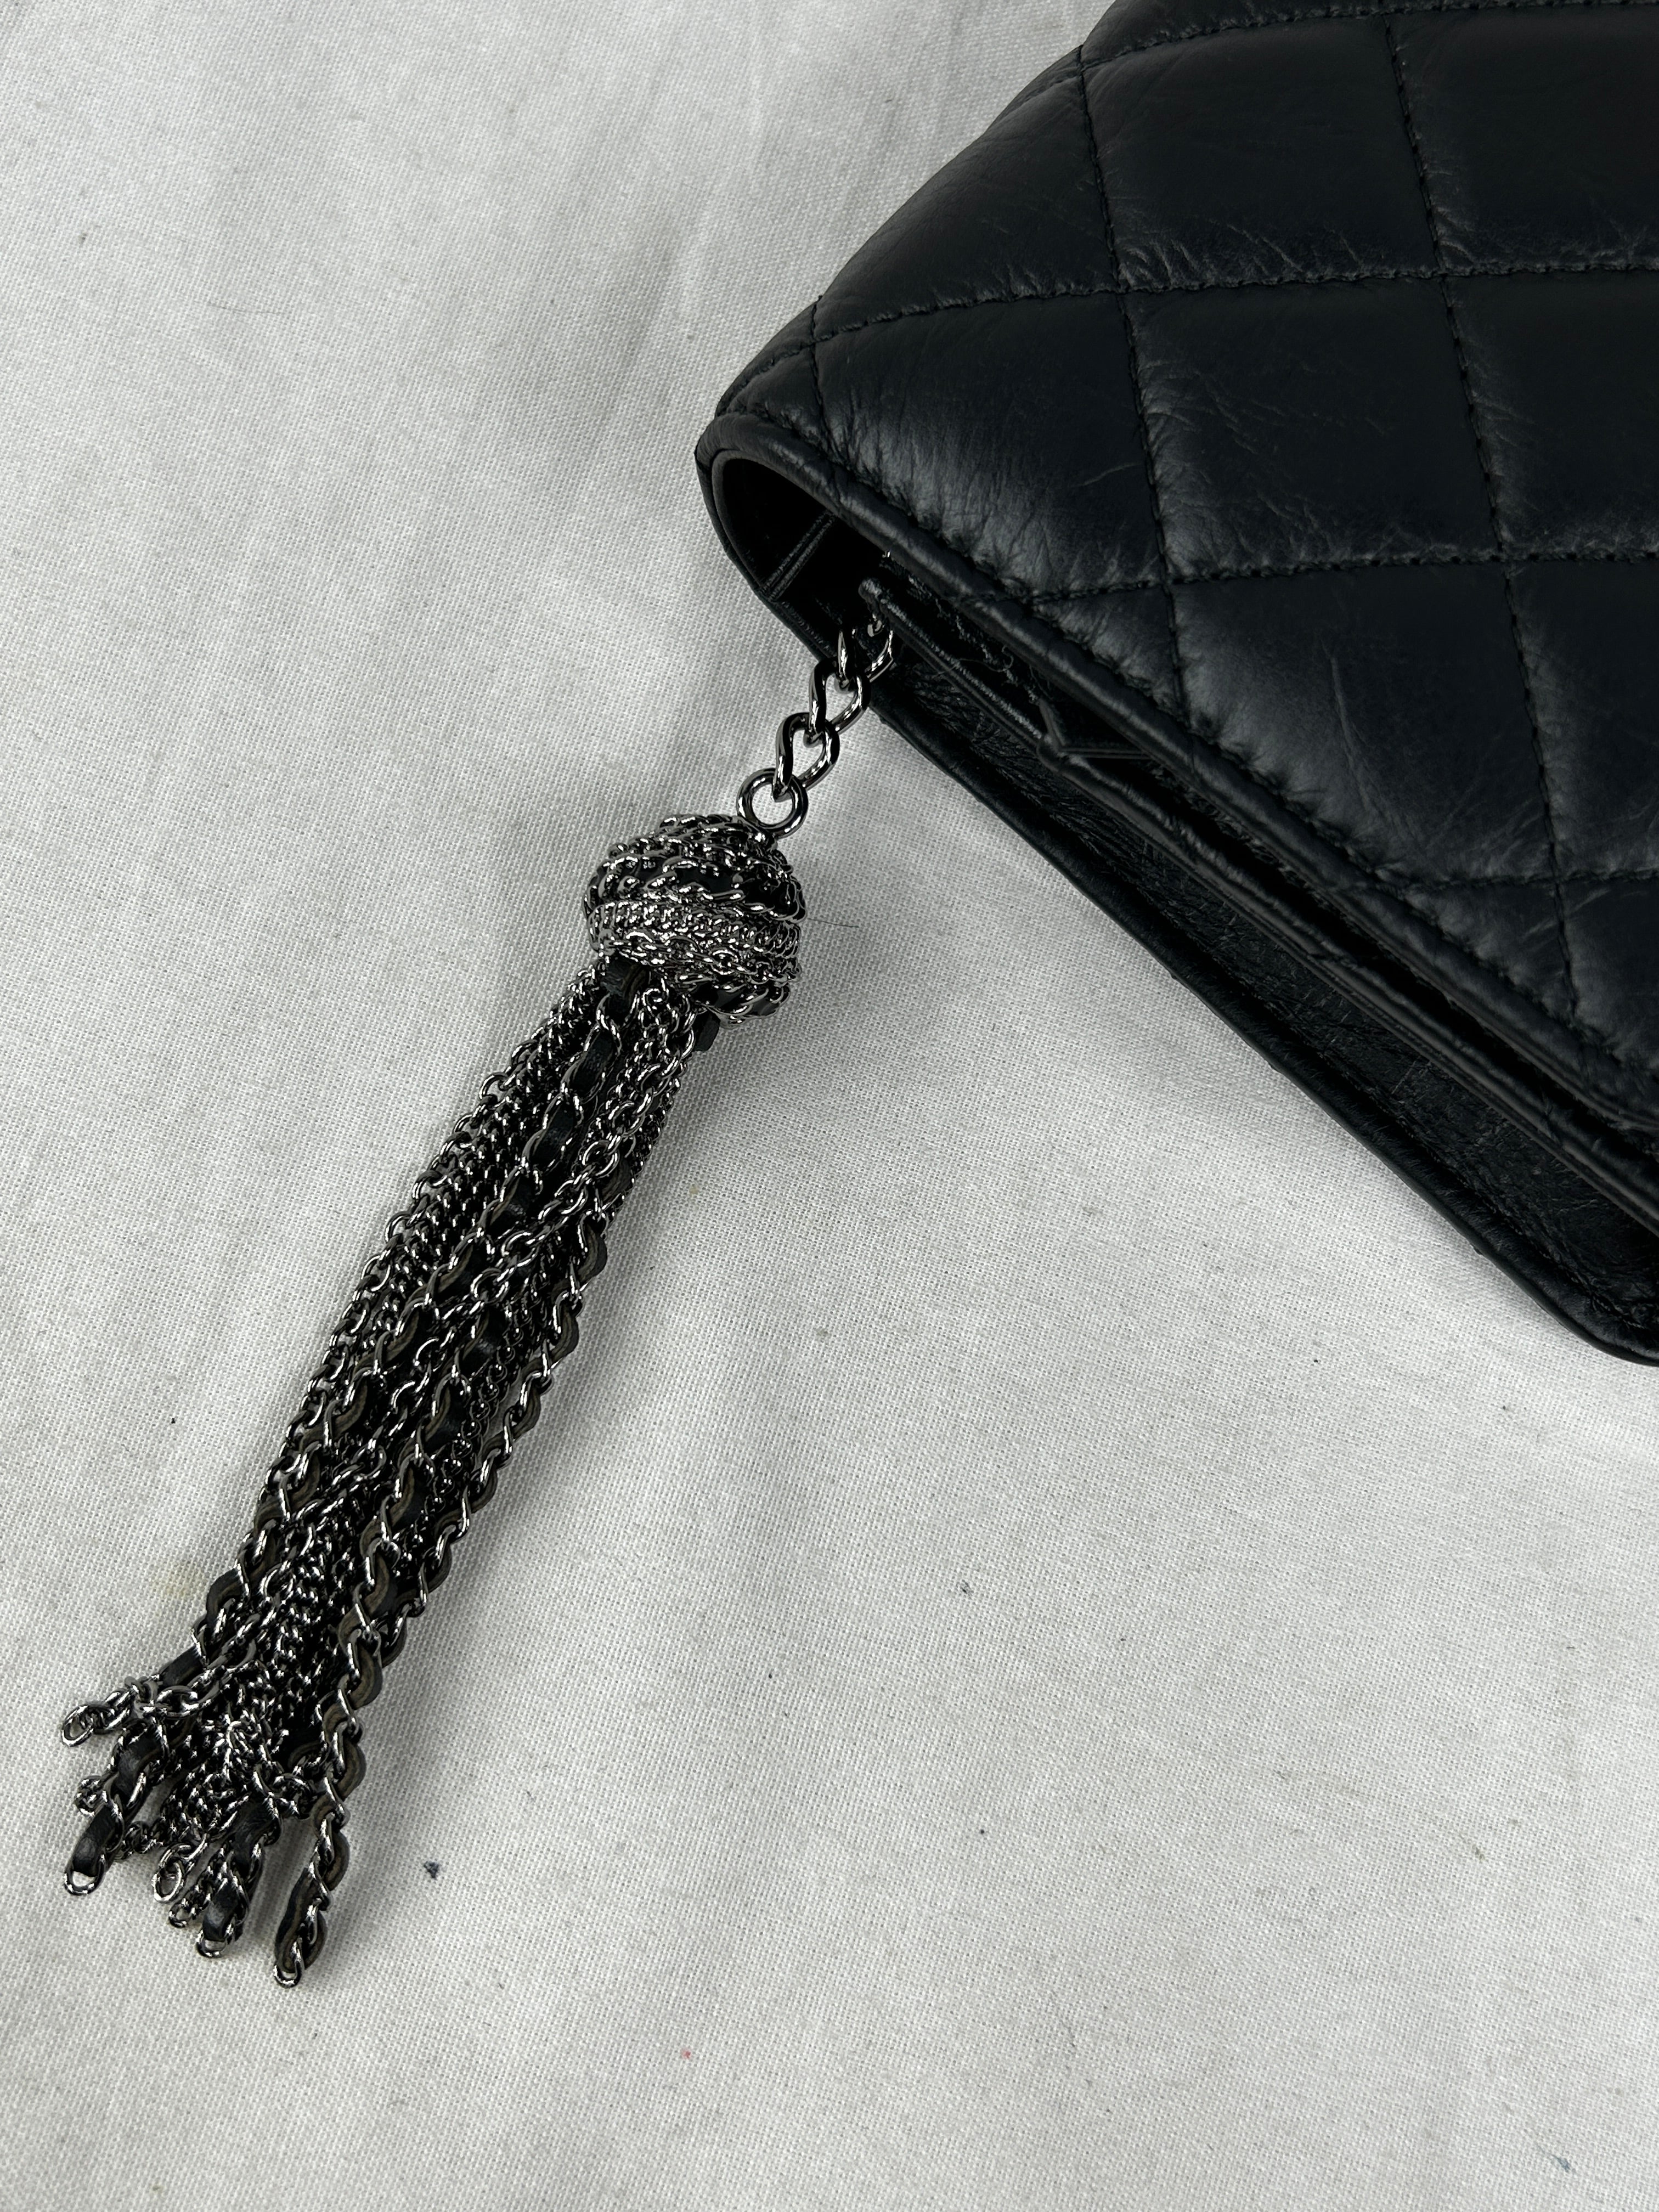 18K Black Iridescent Quilted Aged Calfskin Tassel Wallet on Chain w/SBHW